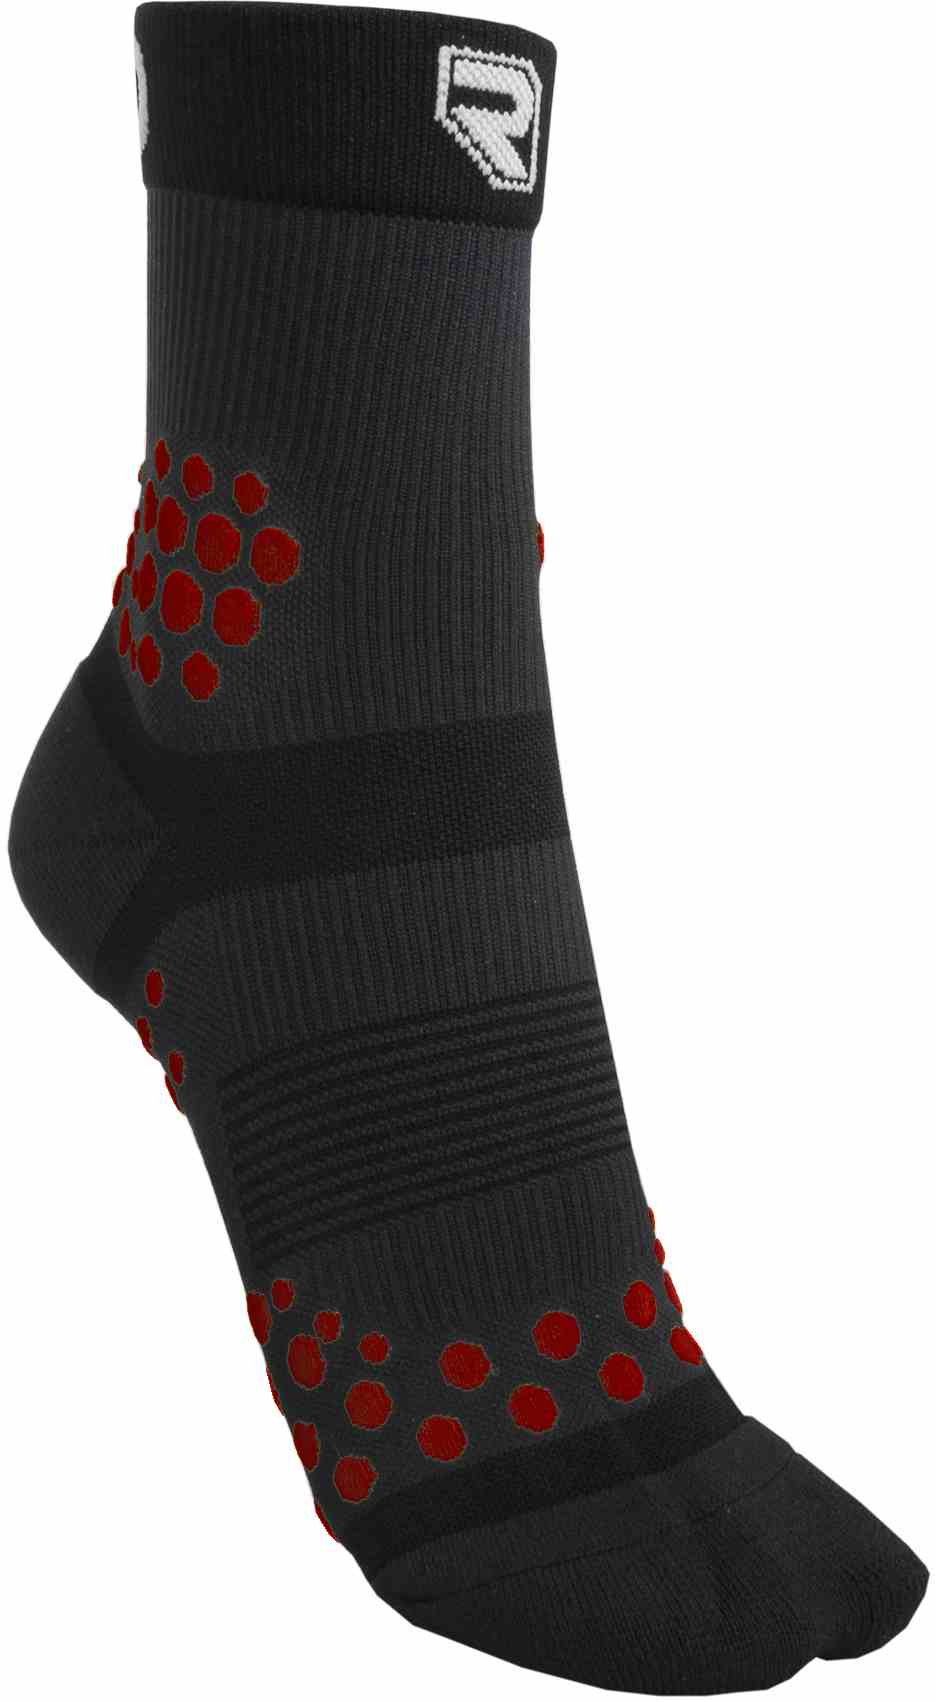 Compression sports socks